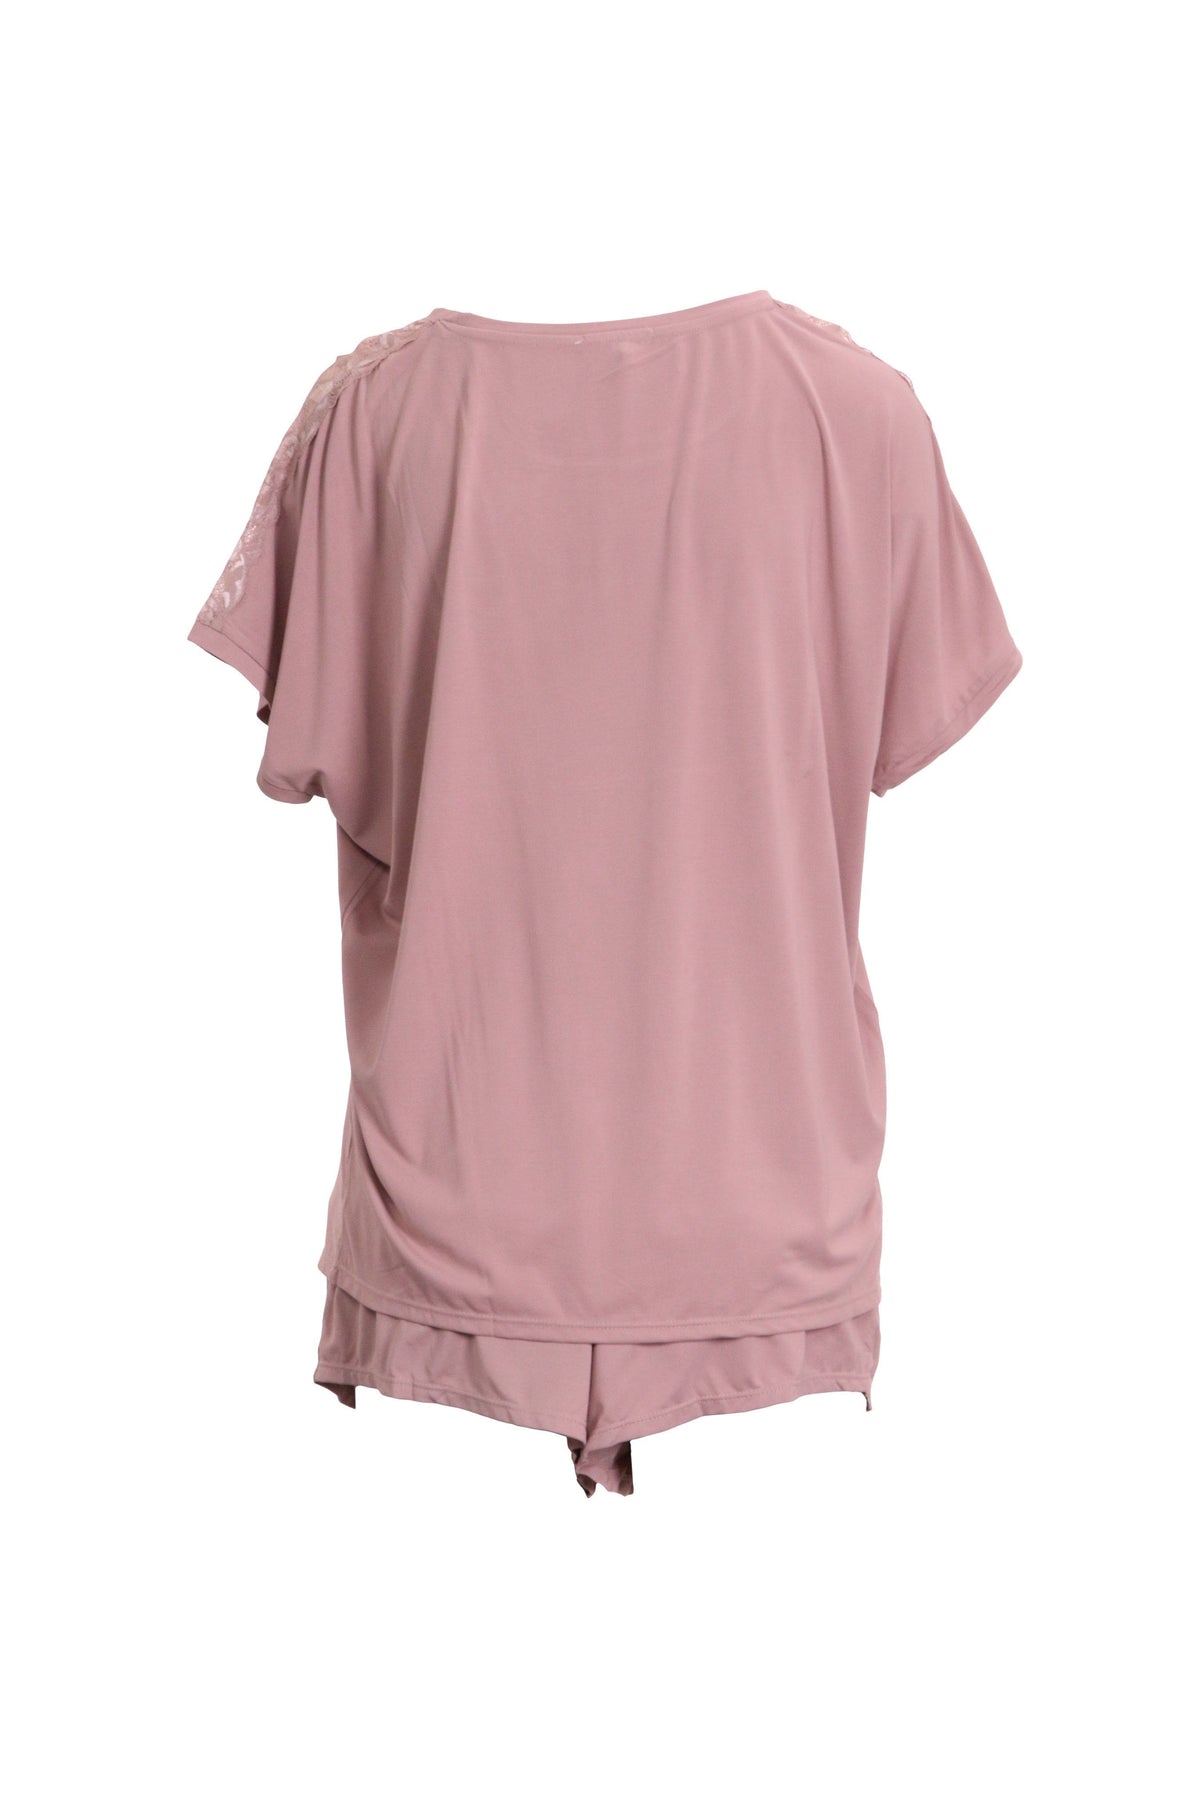 iCollection Pajama Set Plus Size Estelle Pajamas- Blush